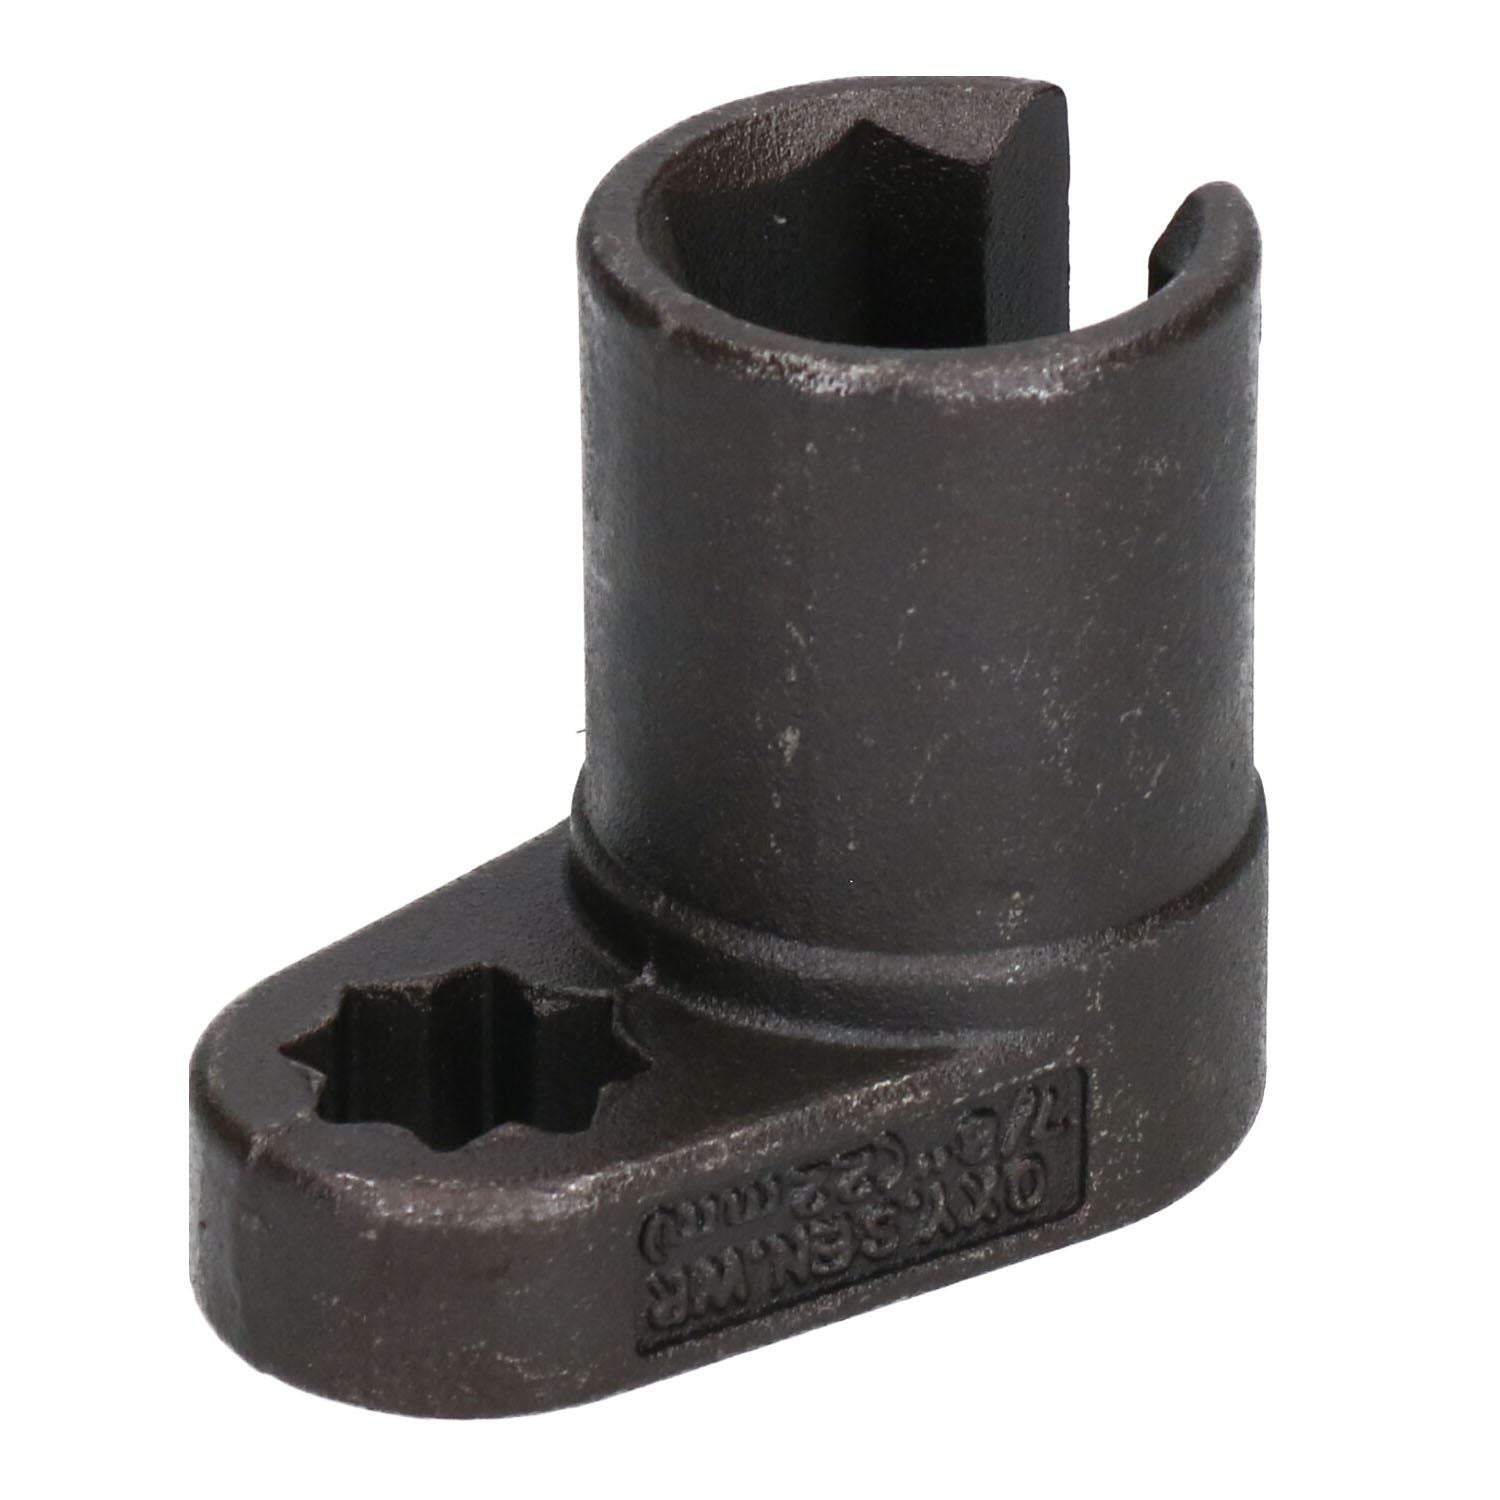 22mm 7/8" Oxygen Sensor Wrench Offset Socket Remover Removal Tool